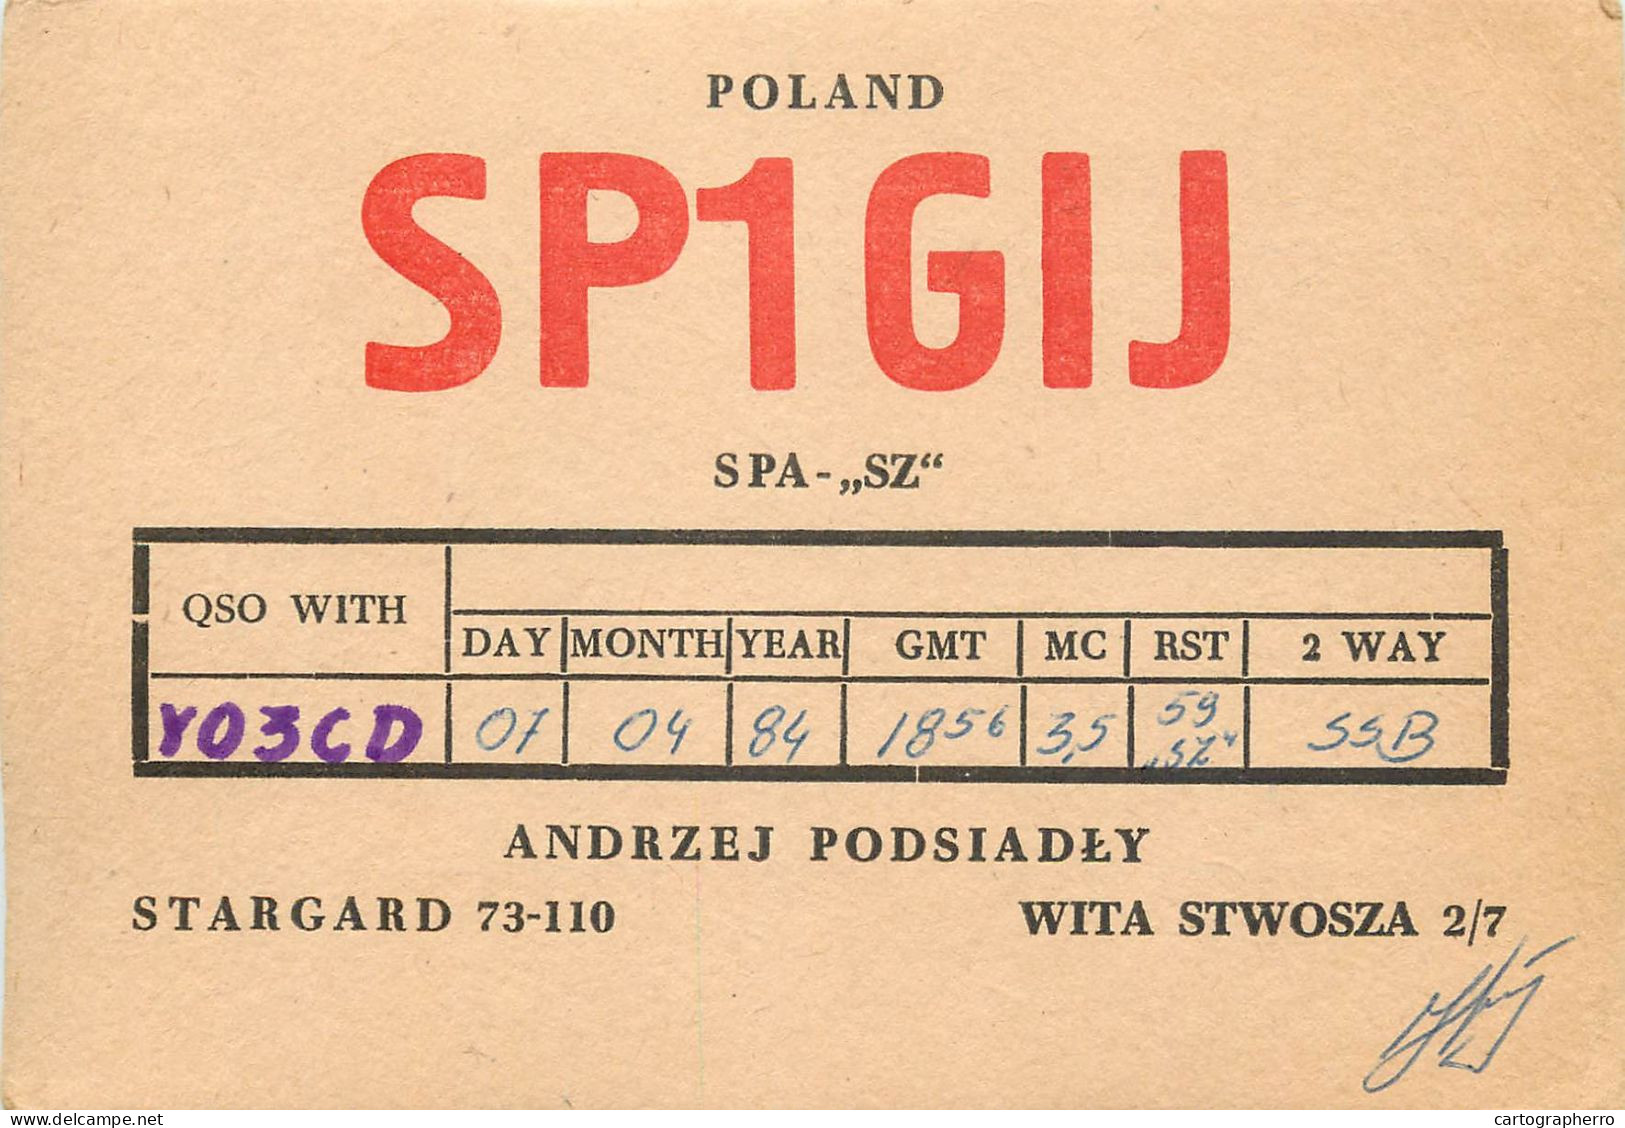 Polish Amateur Radio Station QSL Card Poland SP1GIJ - Radio Amateur